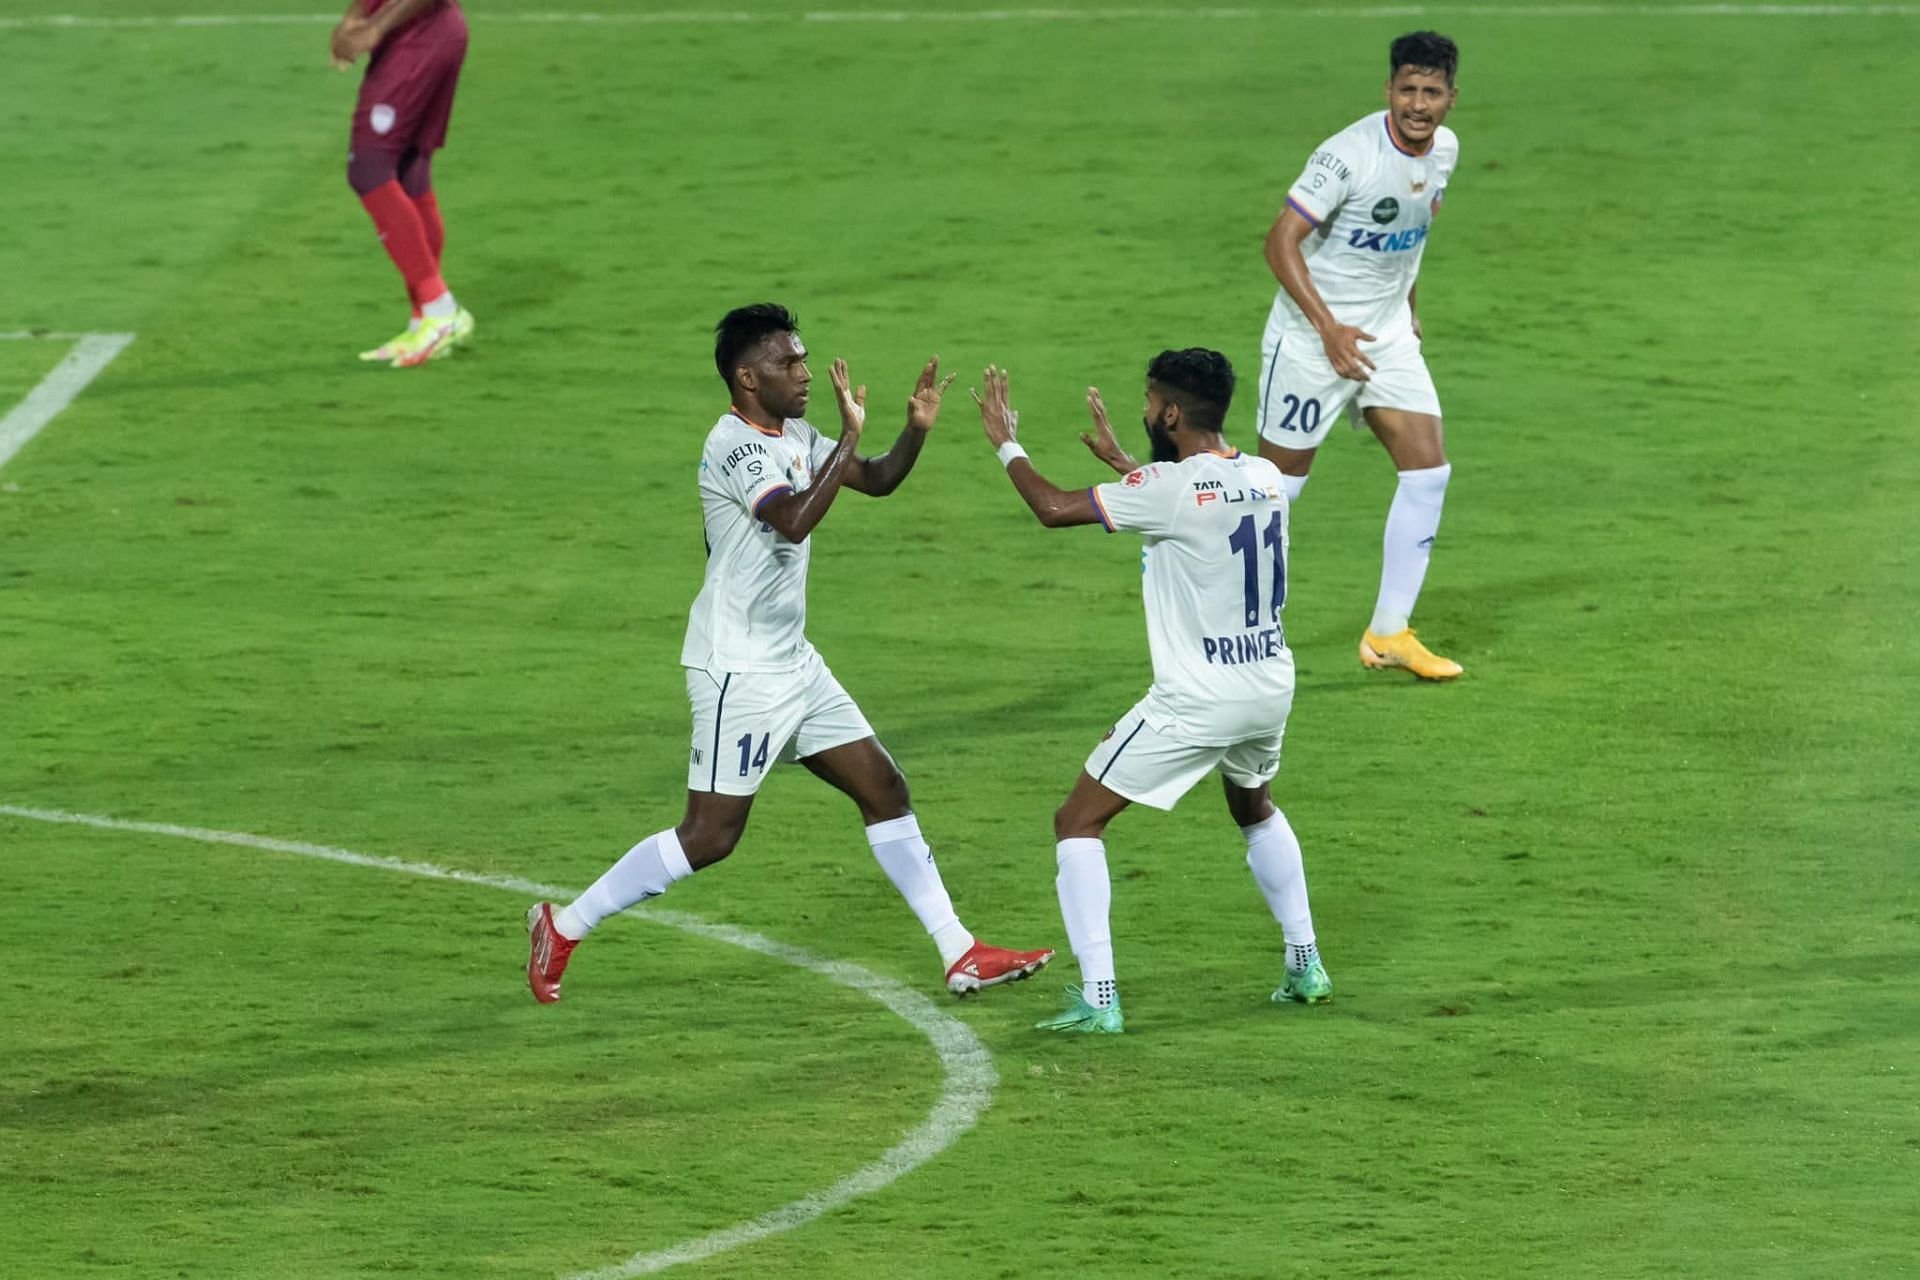 Alexander Romario Jesuraj scored the goal for FC Goa (Image courtesy ISL Social Media)